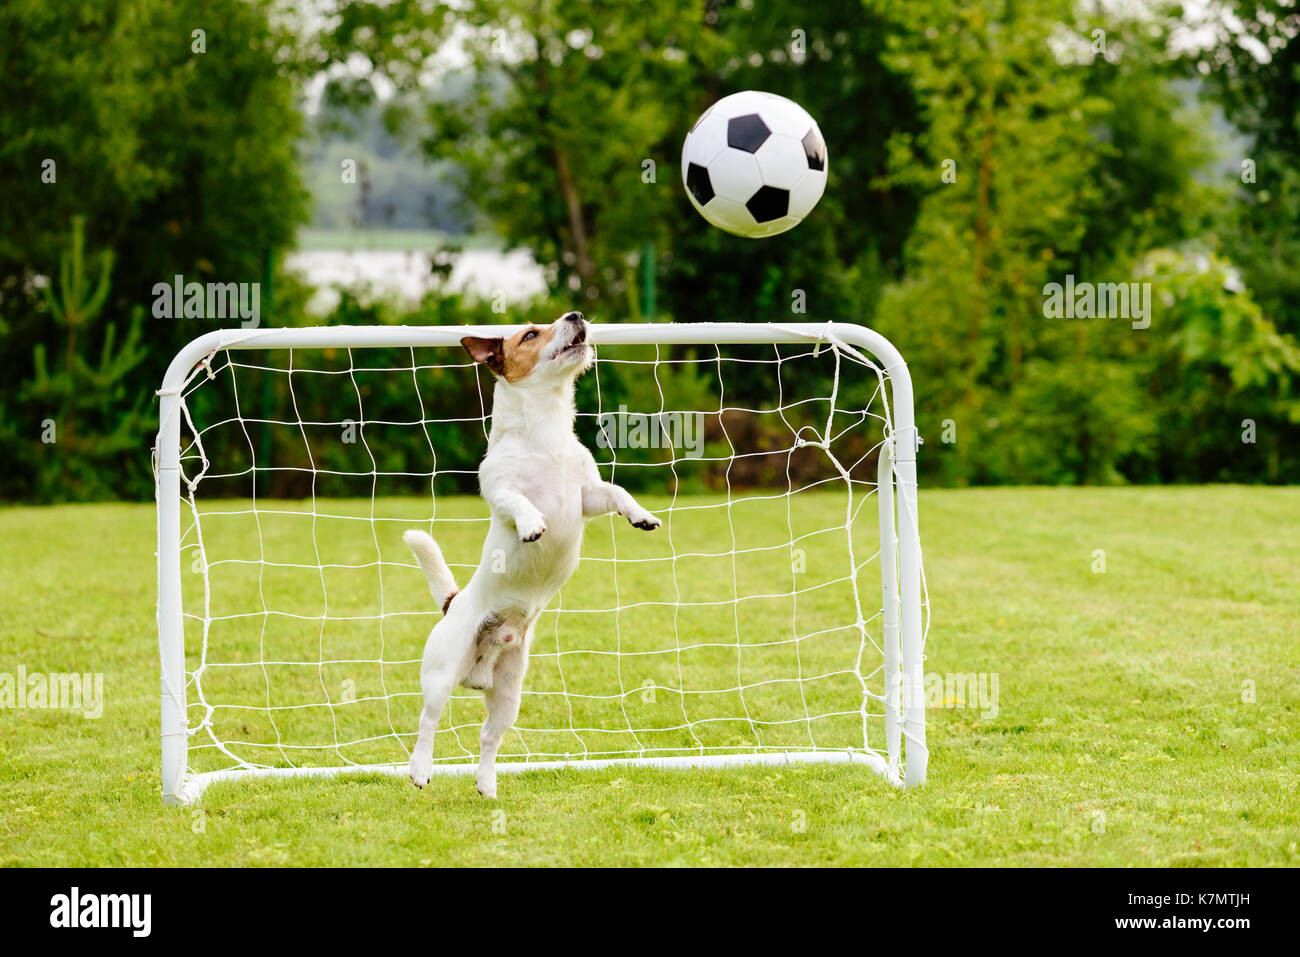 Amusing goalie catching generic football (soccer) ball saving goal Stock Photo